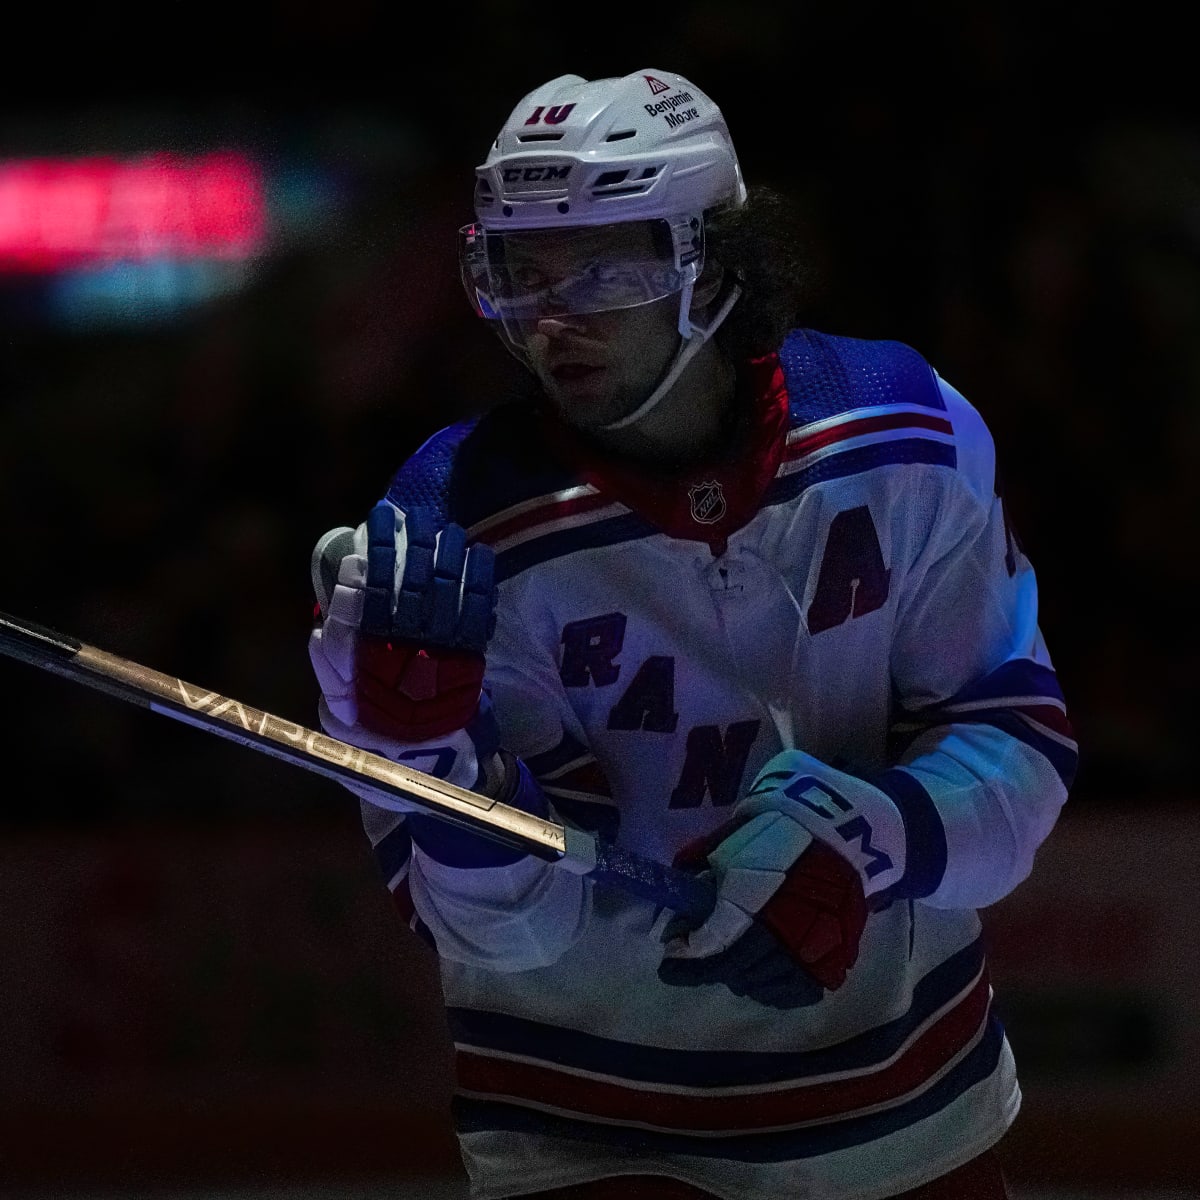 Mugno: The New York Rangers Star Players - The Hockey News New